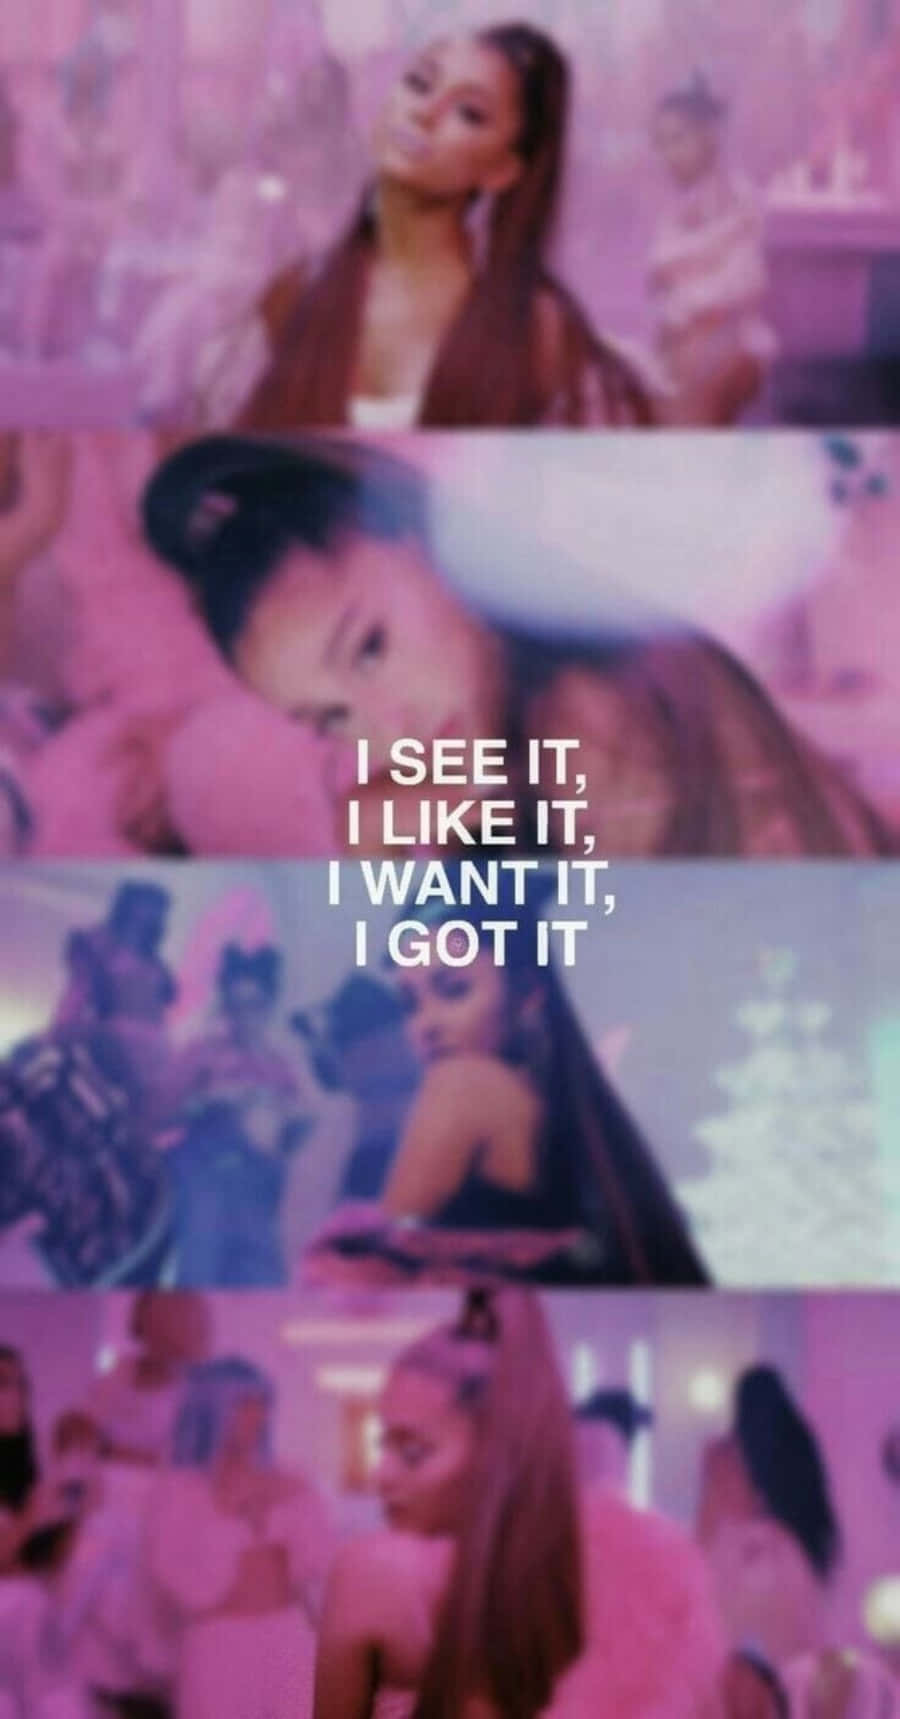 Ariana Grande 7 Rings Texter Wallpaper